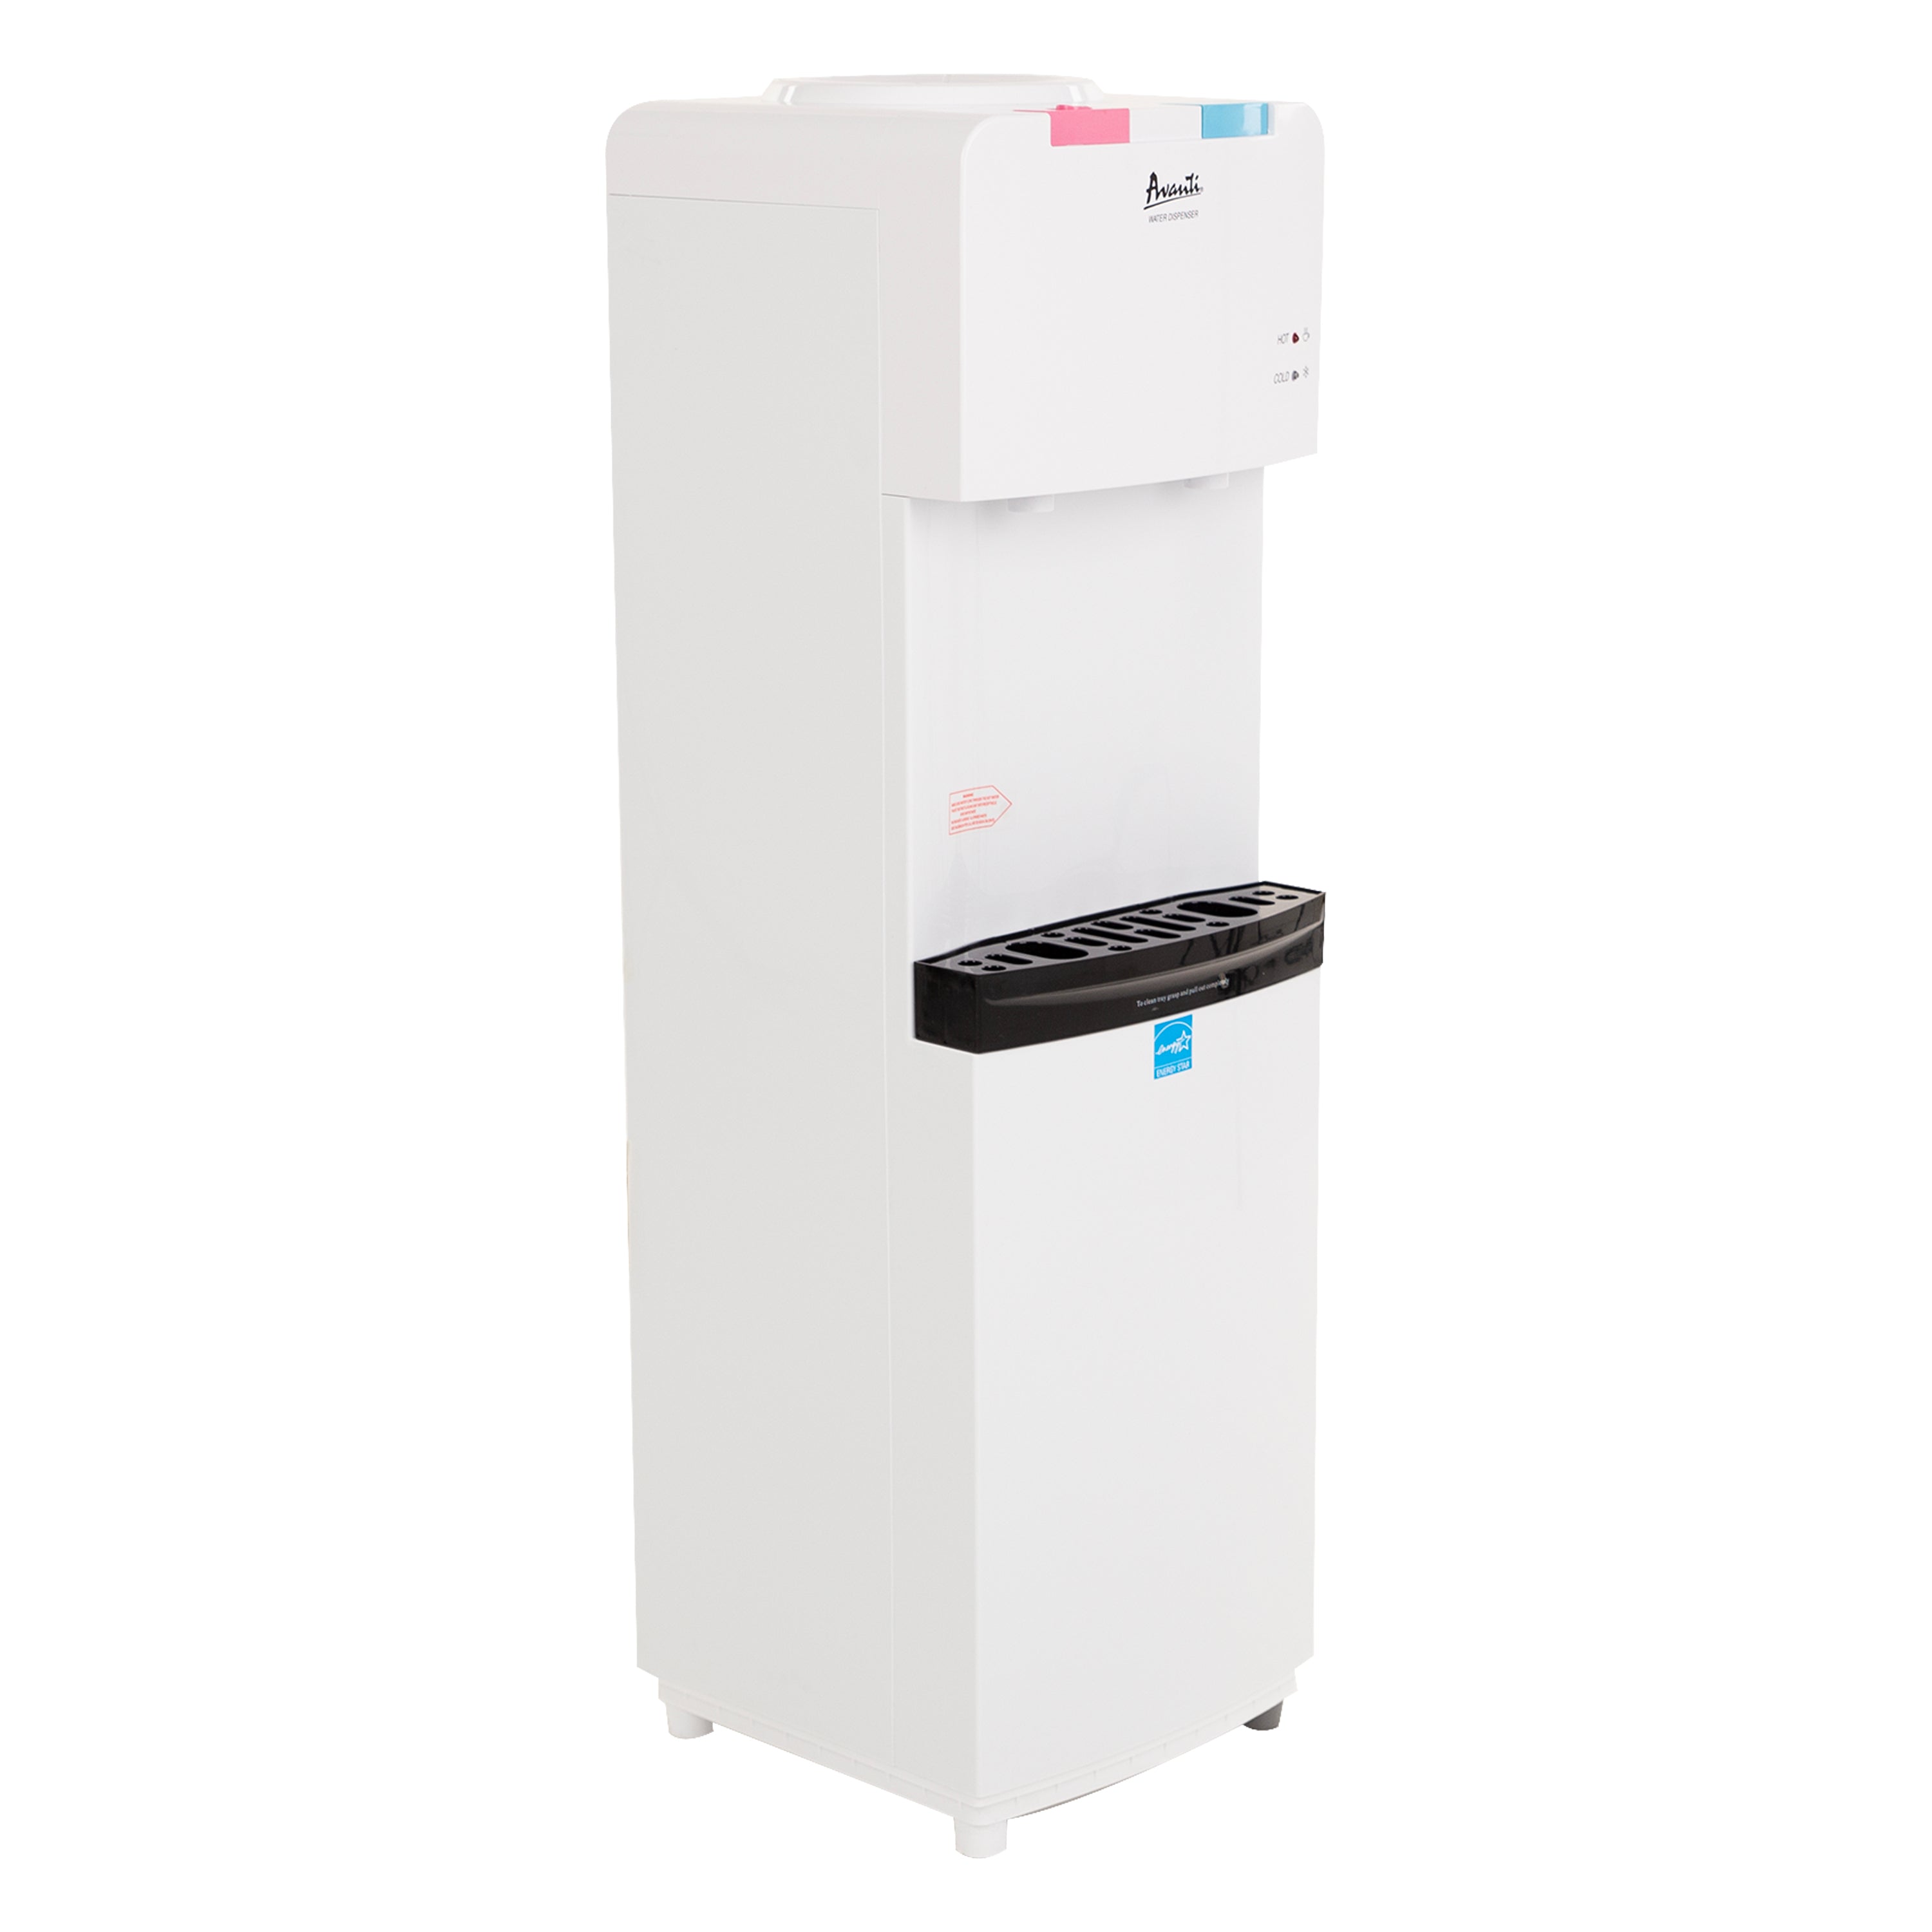 Avanti - WDHC770I0W, Avanti Hot and Cold Water Dispenser, in White